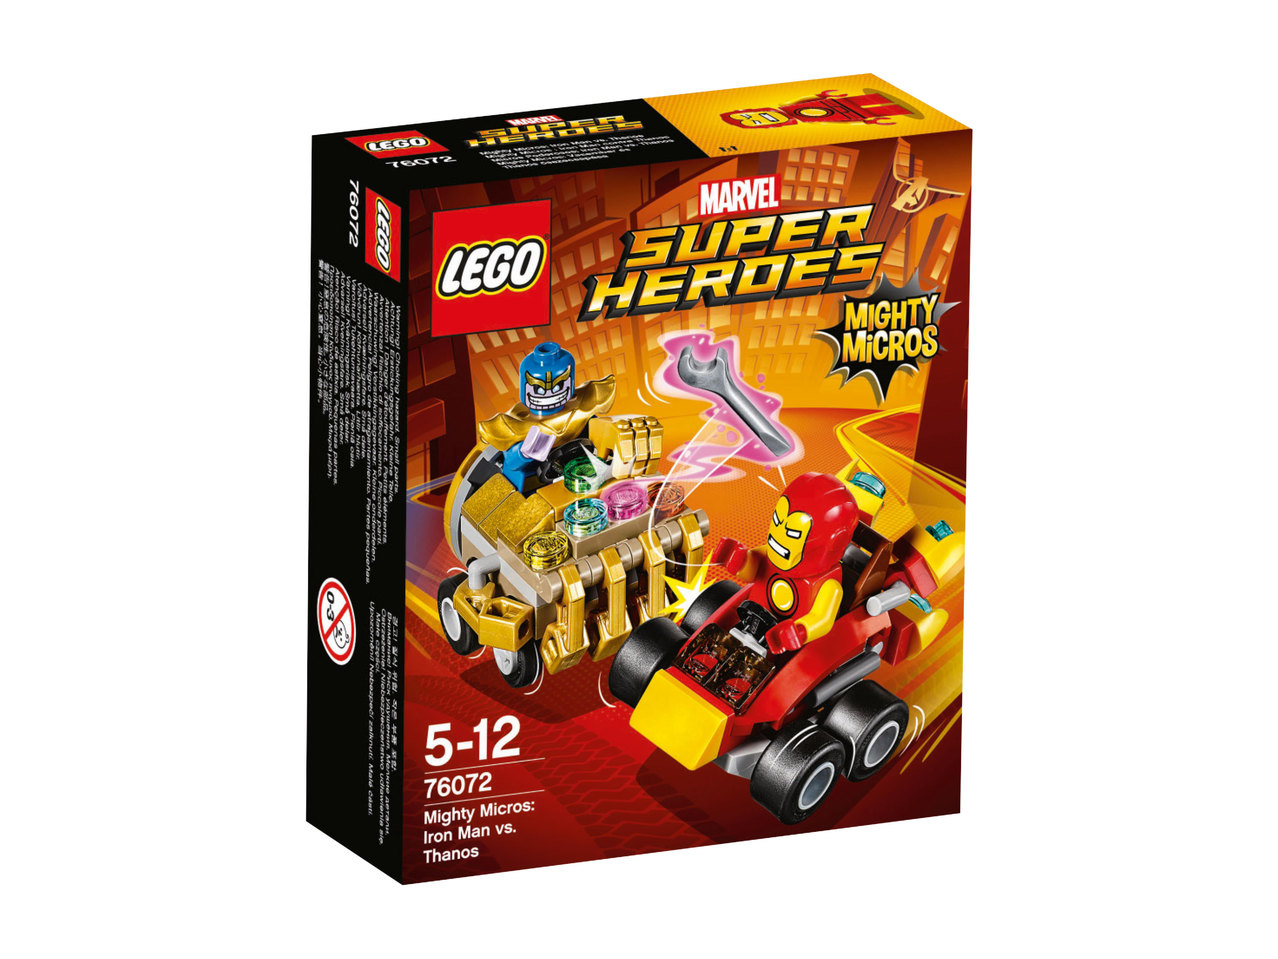 Kit de blocs de construction Lego